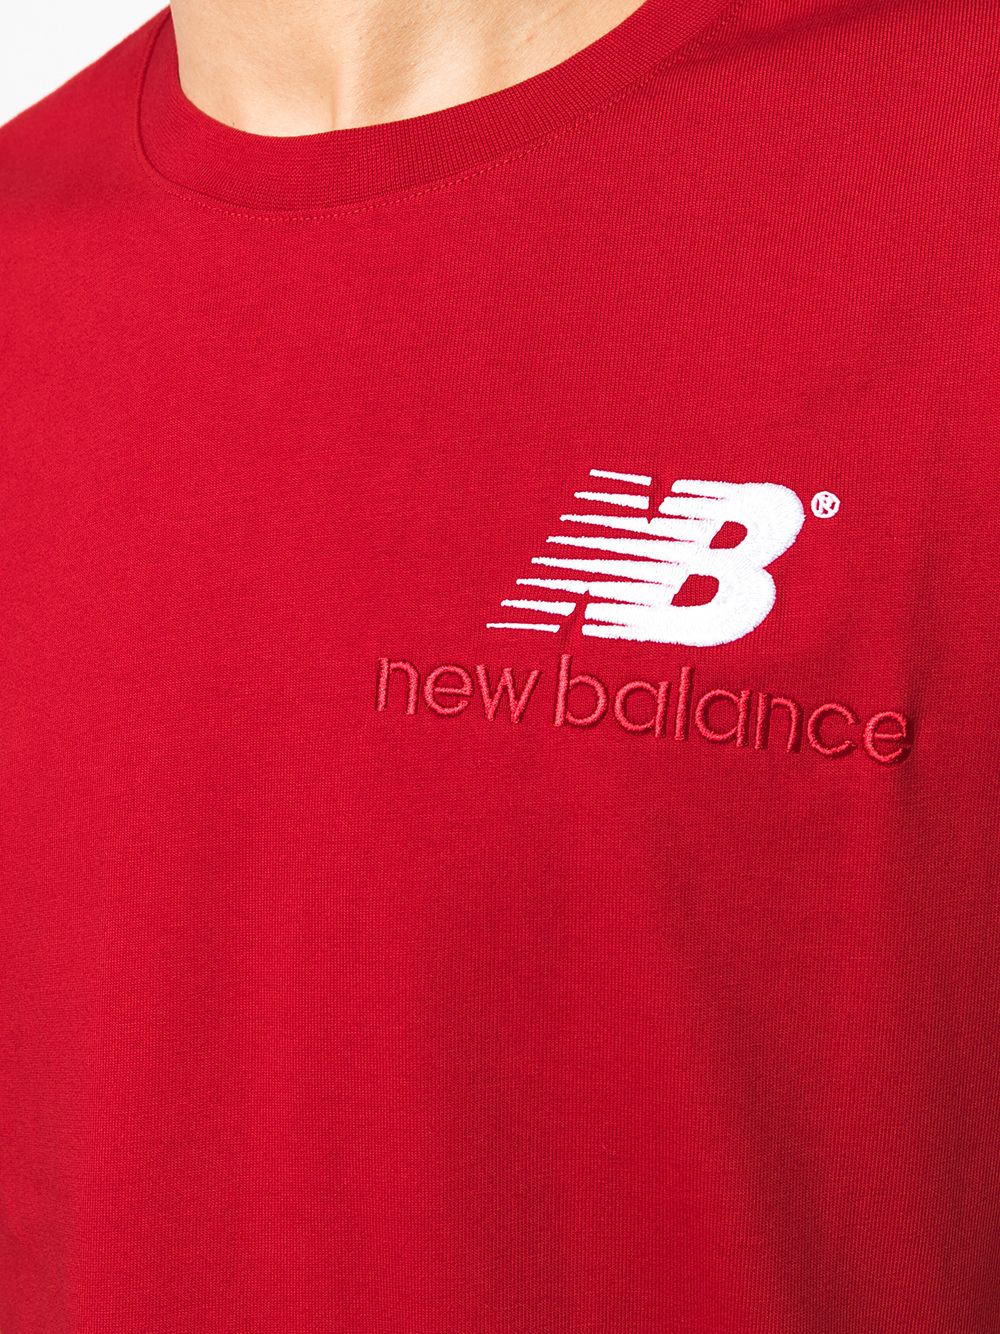 фото New balance футболка с логотипом